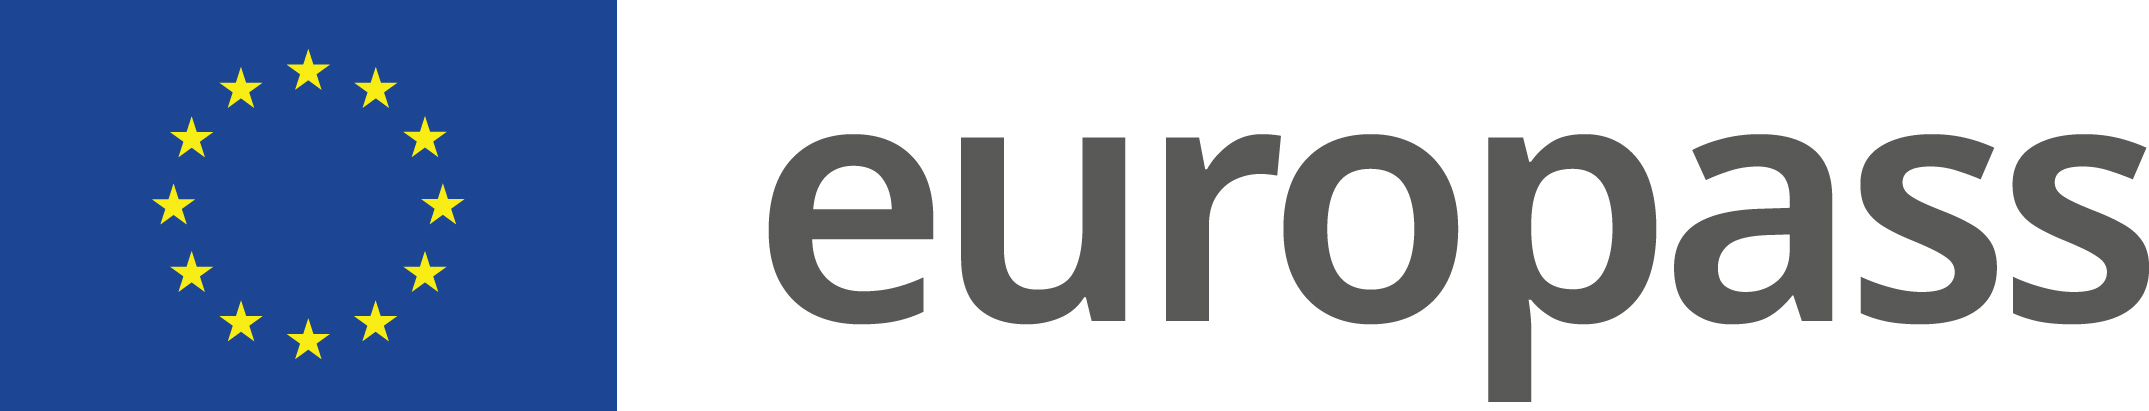 logo-europass-barevne-2020-RGB